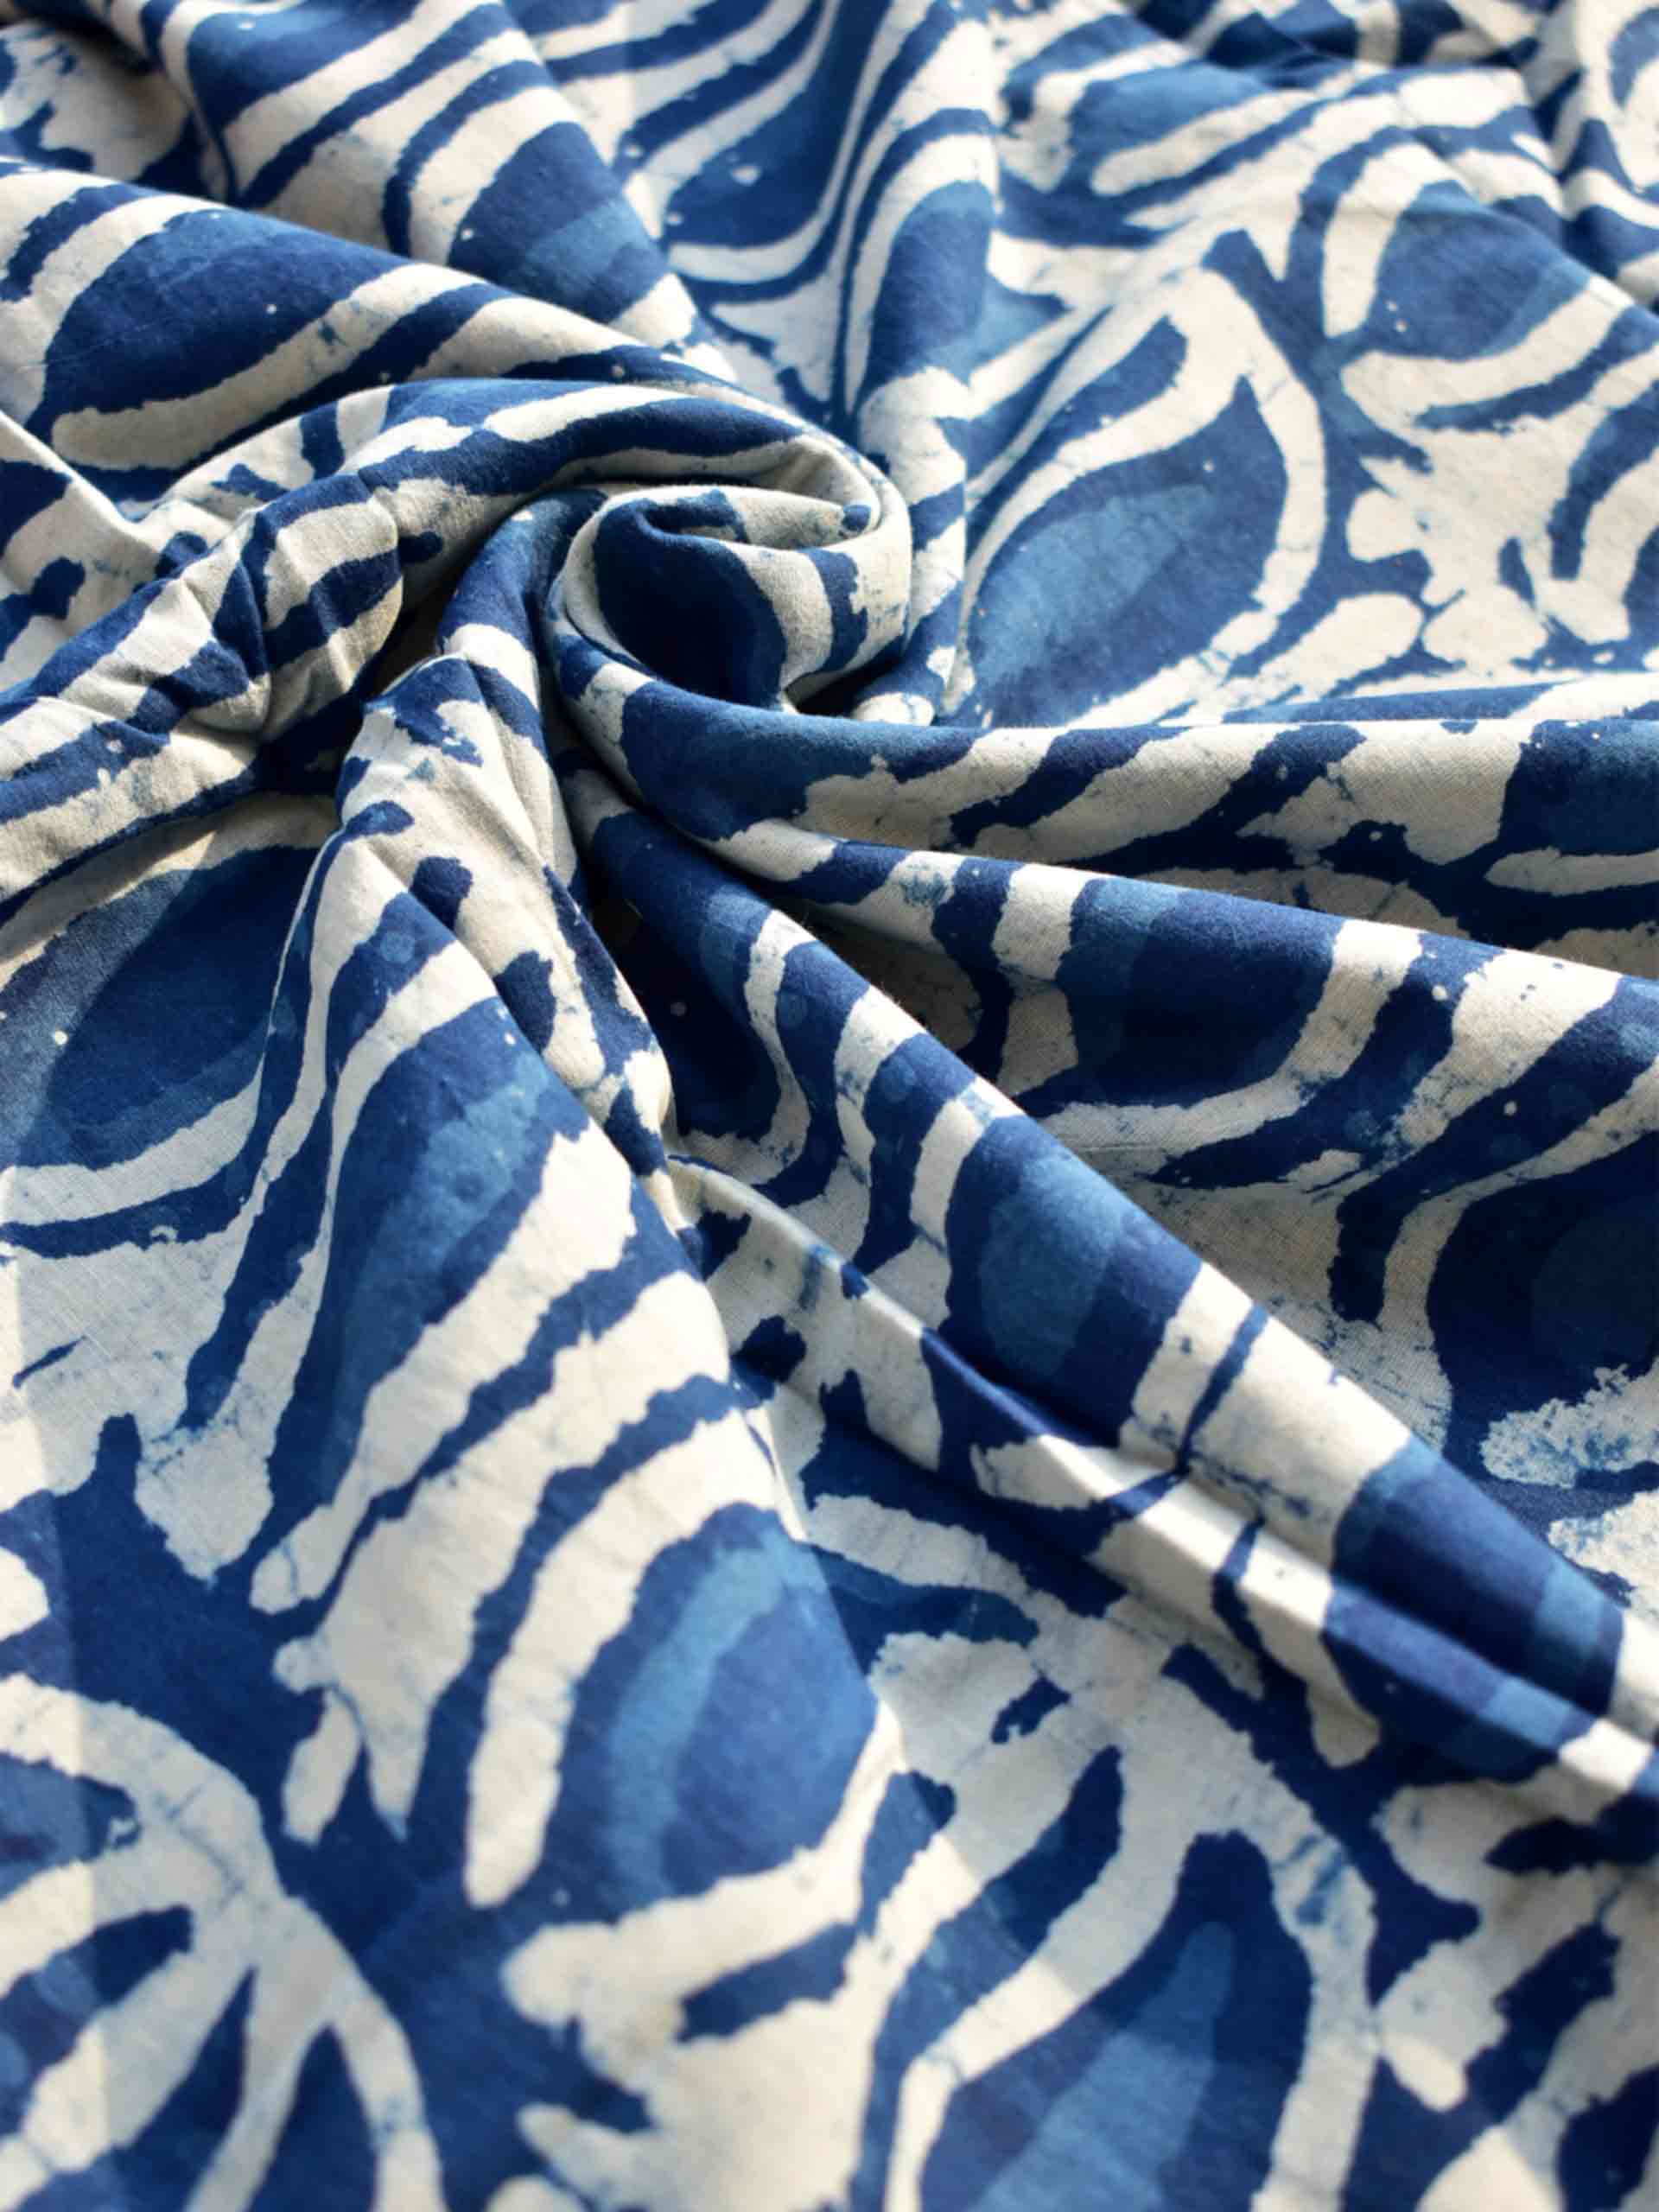 Blue ivy - hand block printed Cotton fabric 280 per meter